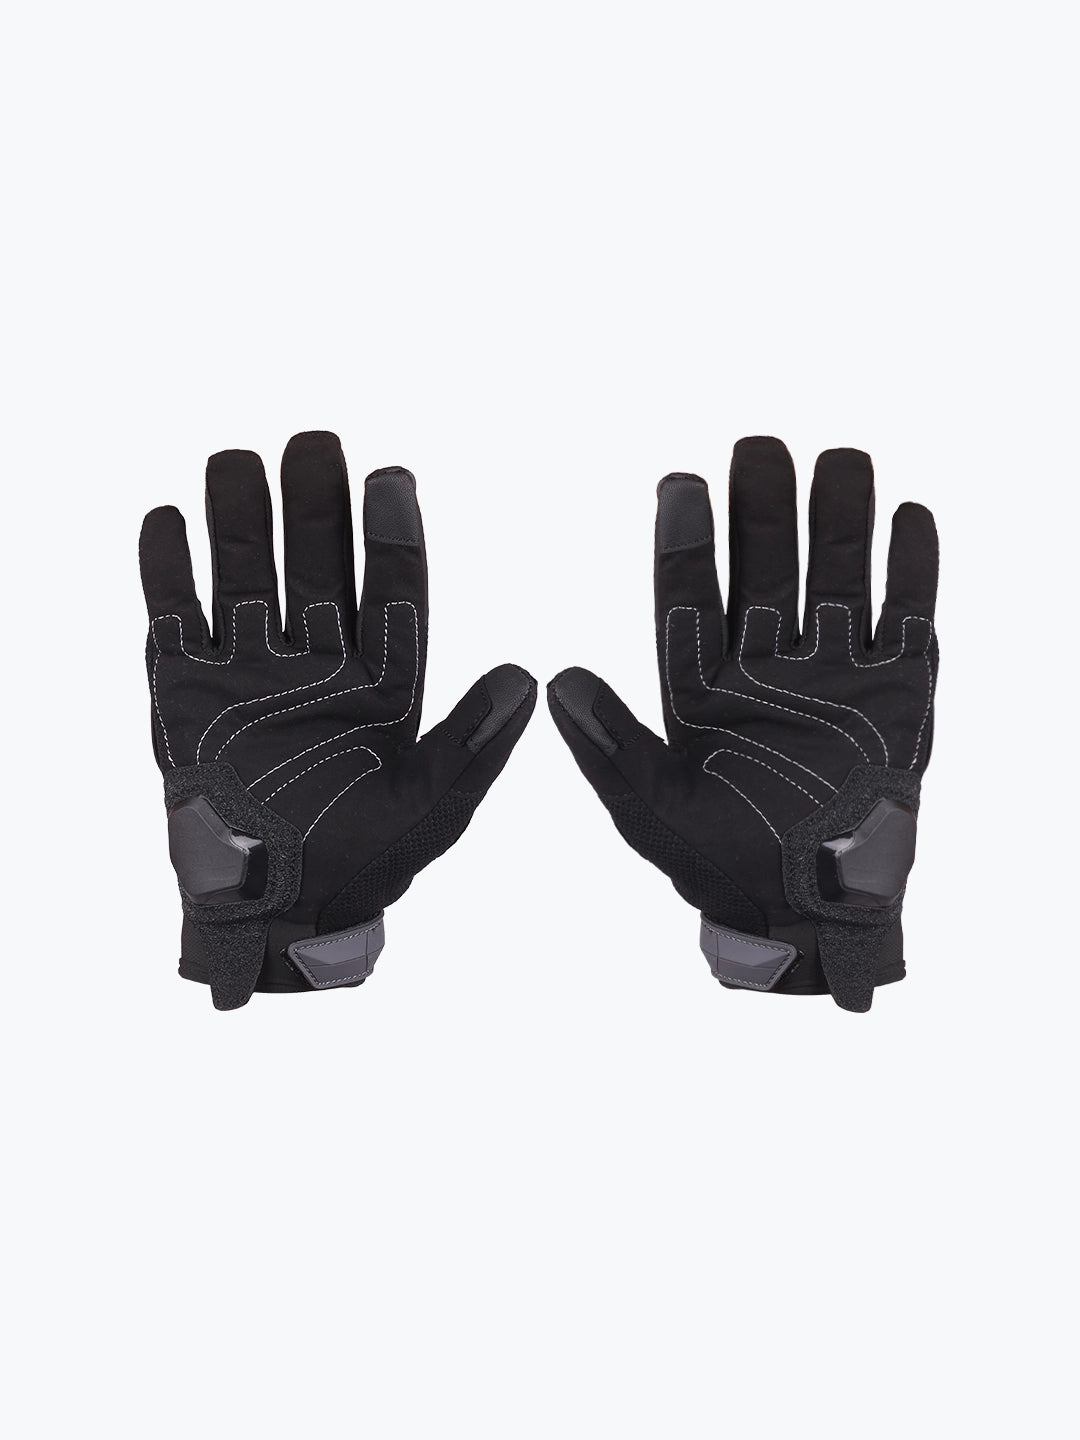 Cuirassier Gloves Grey Red